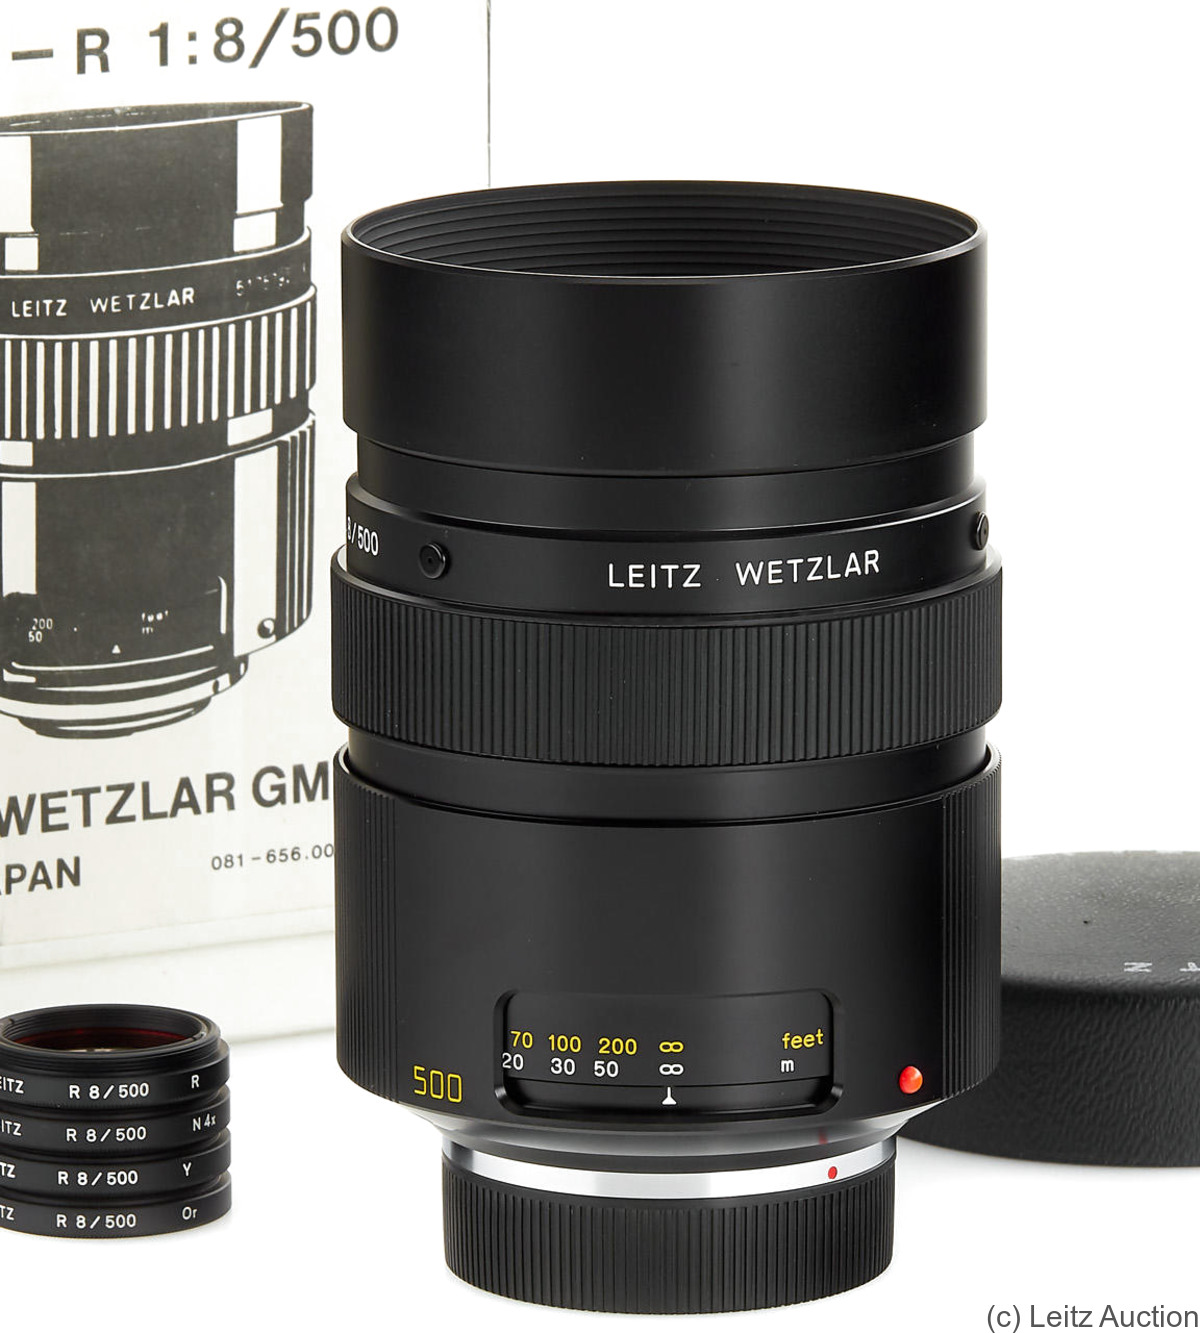 Leitz: 500mm (50cm) f8 MR-Telyt-R camera